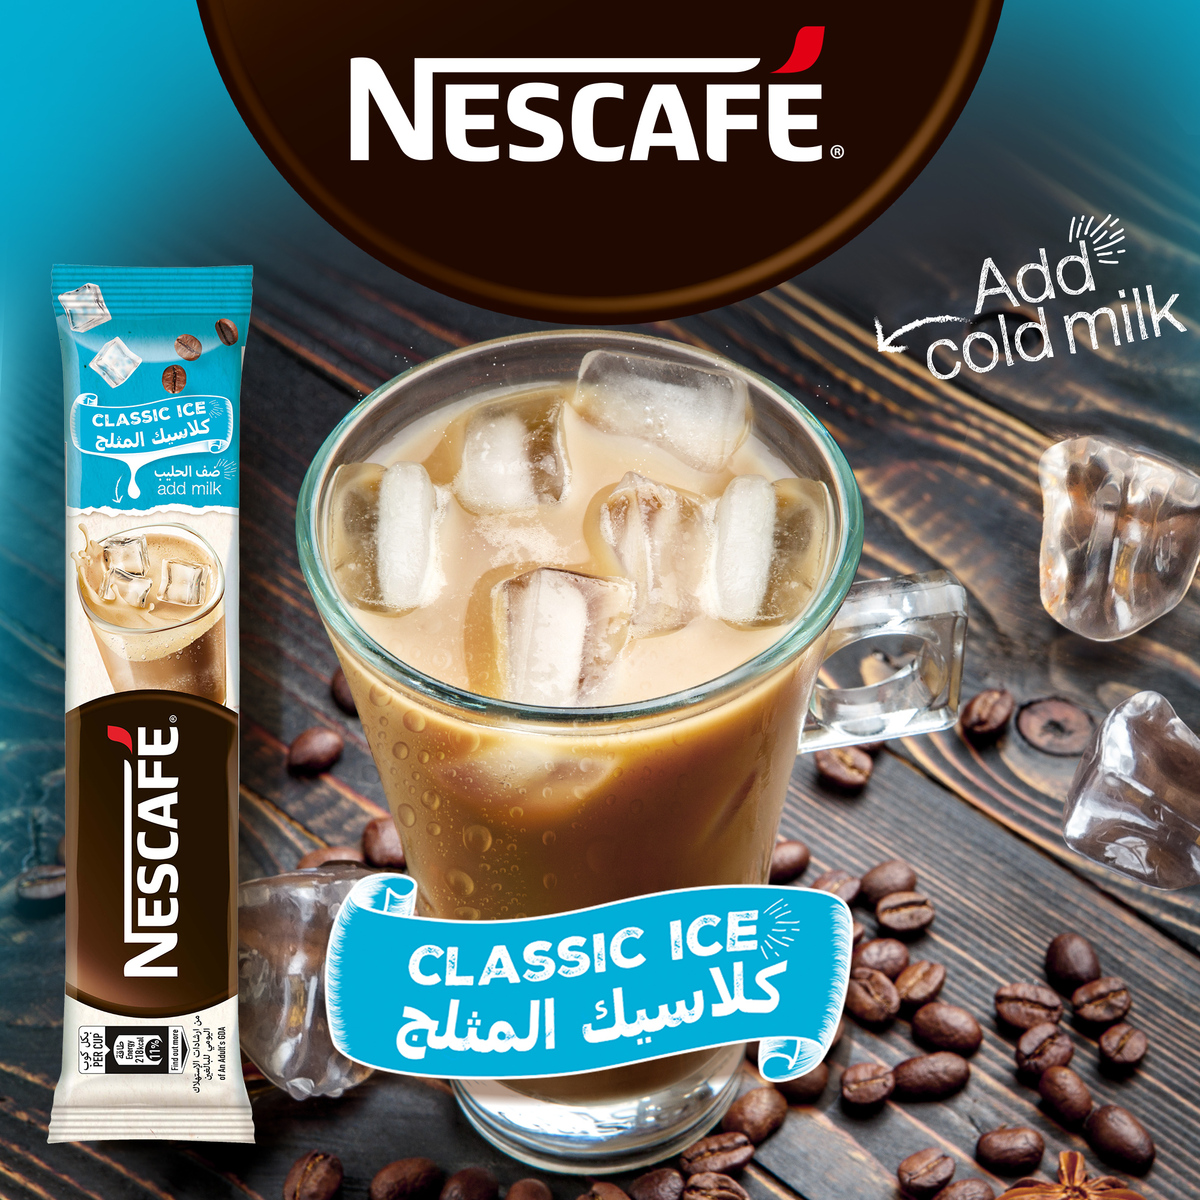 Nescafe Classic Ice 10 x 25 g